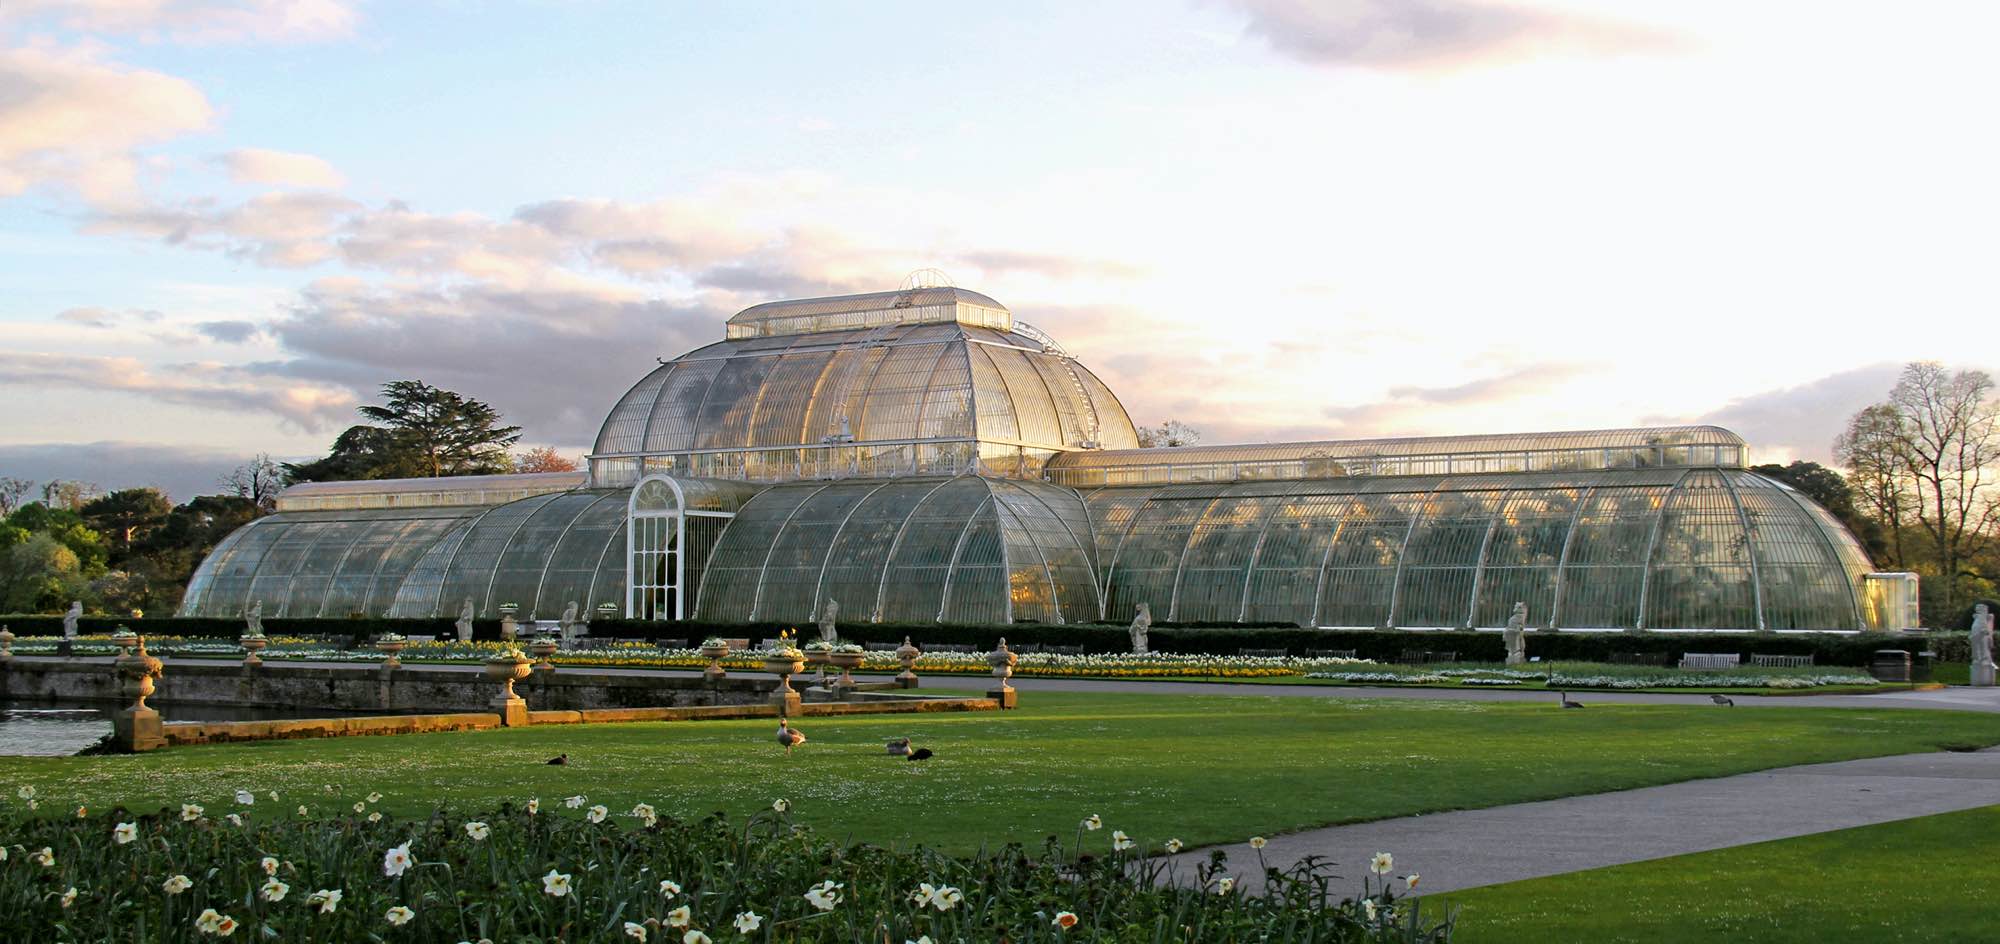 Conservatories and Greenhouses: A Transatlantic Exchange